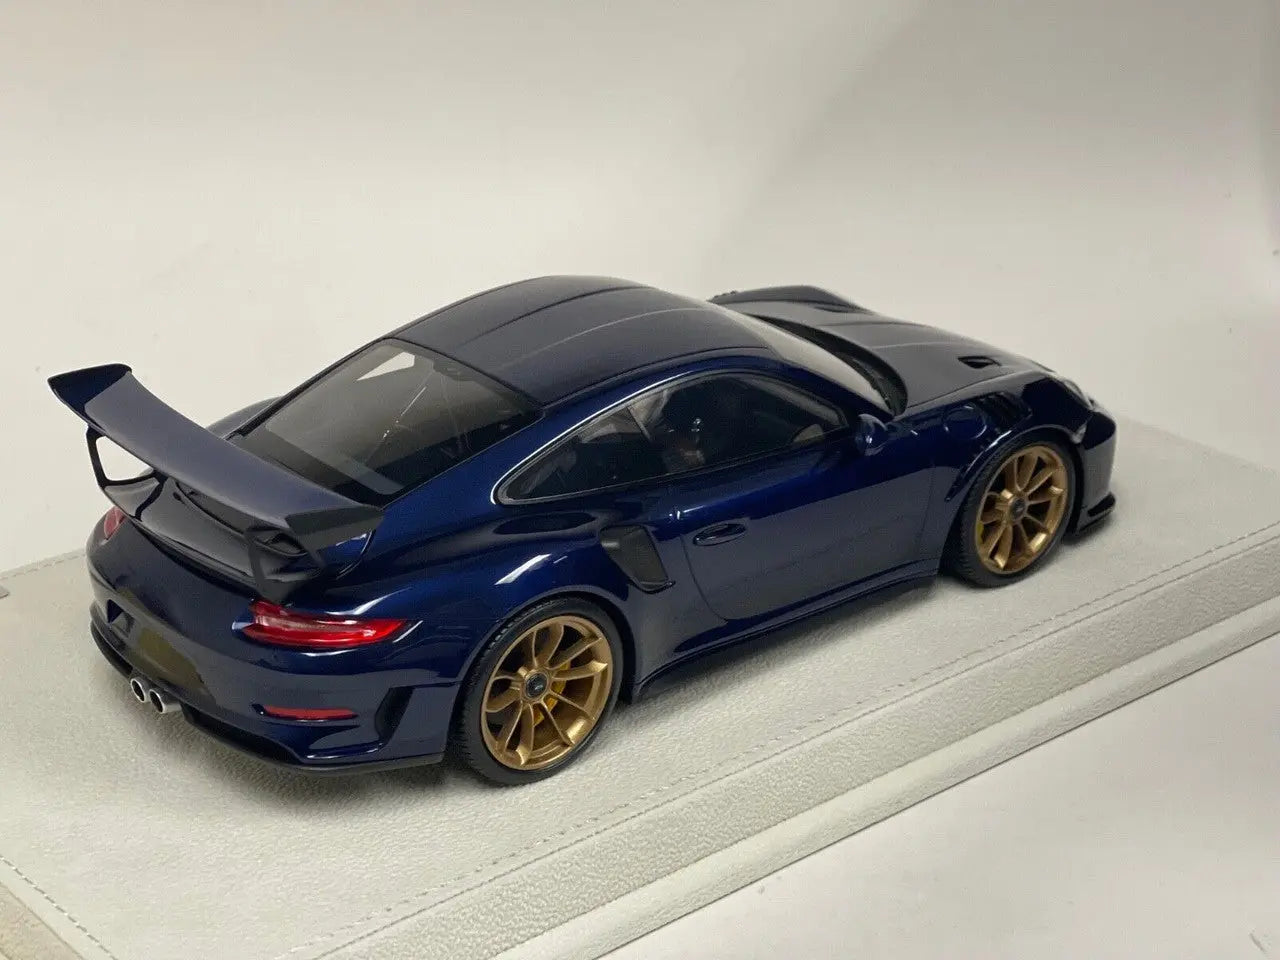 Porsche 911 (991.2) GT3 RS (Irish Blue) 1:18 Scale - Perfect Diecast